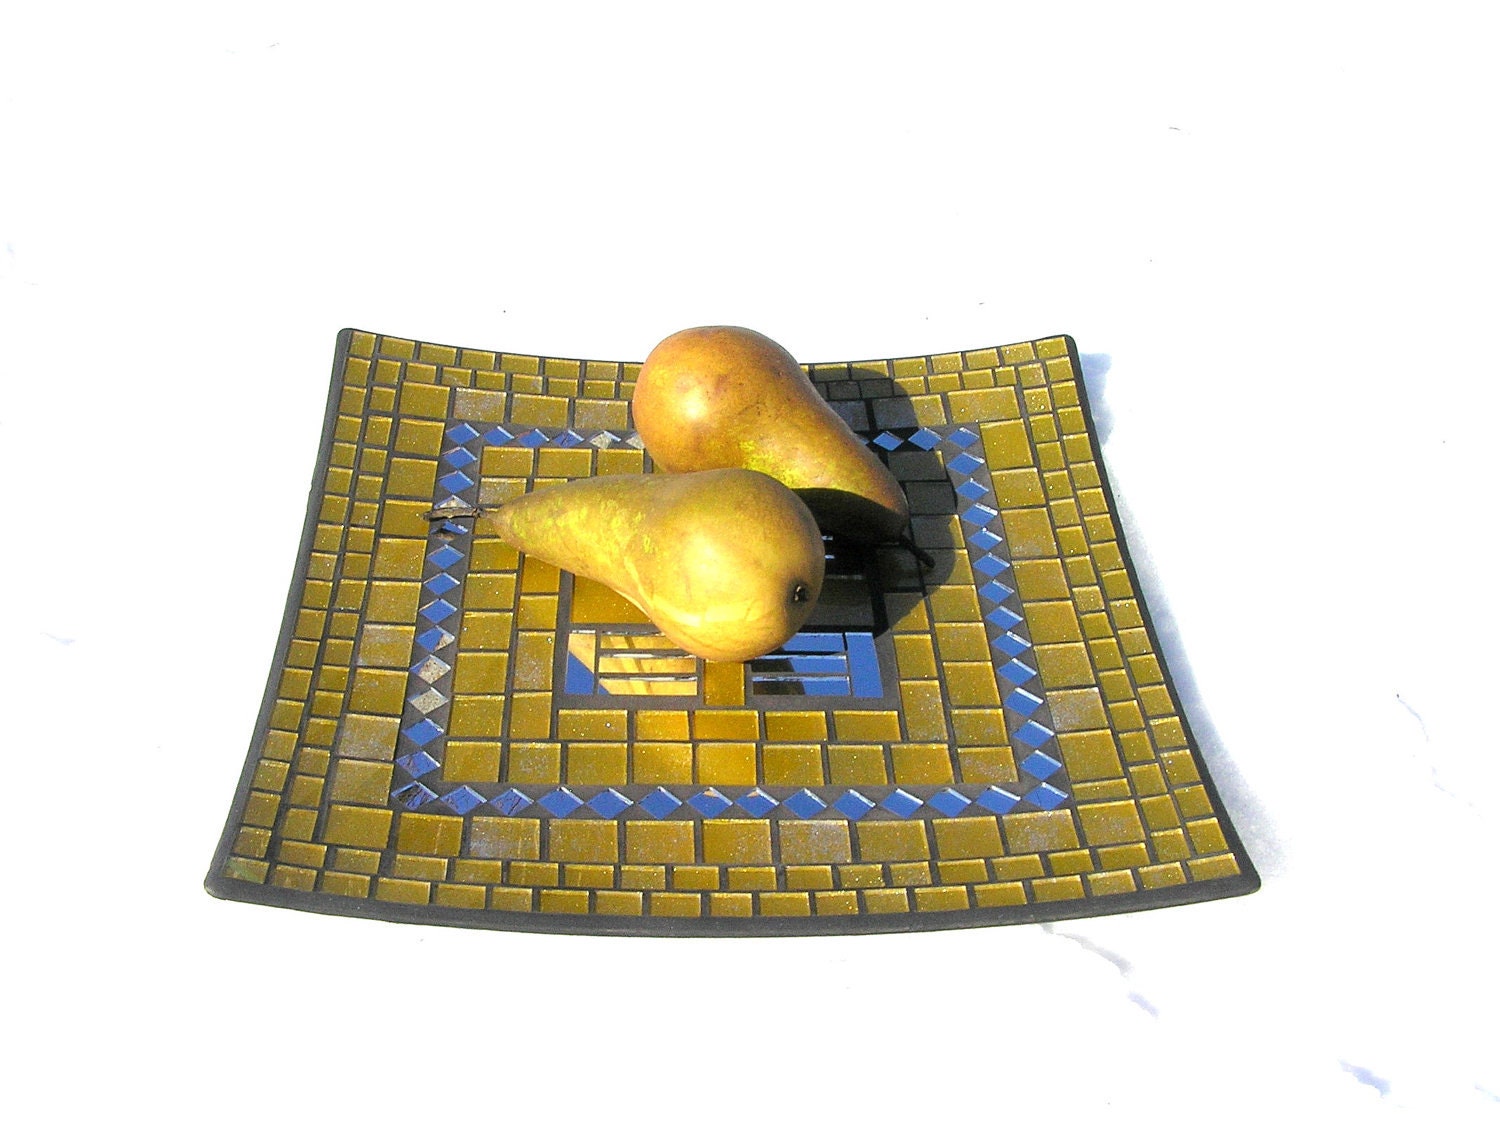 Golden yellow fruit platter designer mosaic chic modern home decor - SirliMosaic